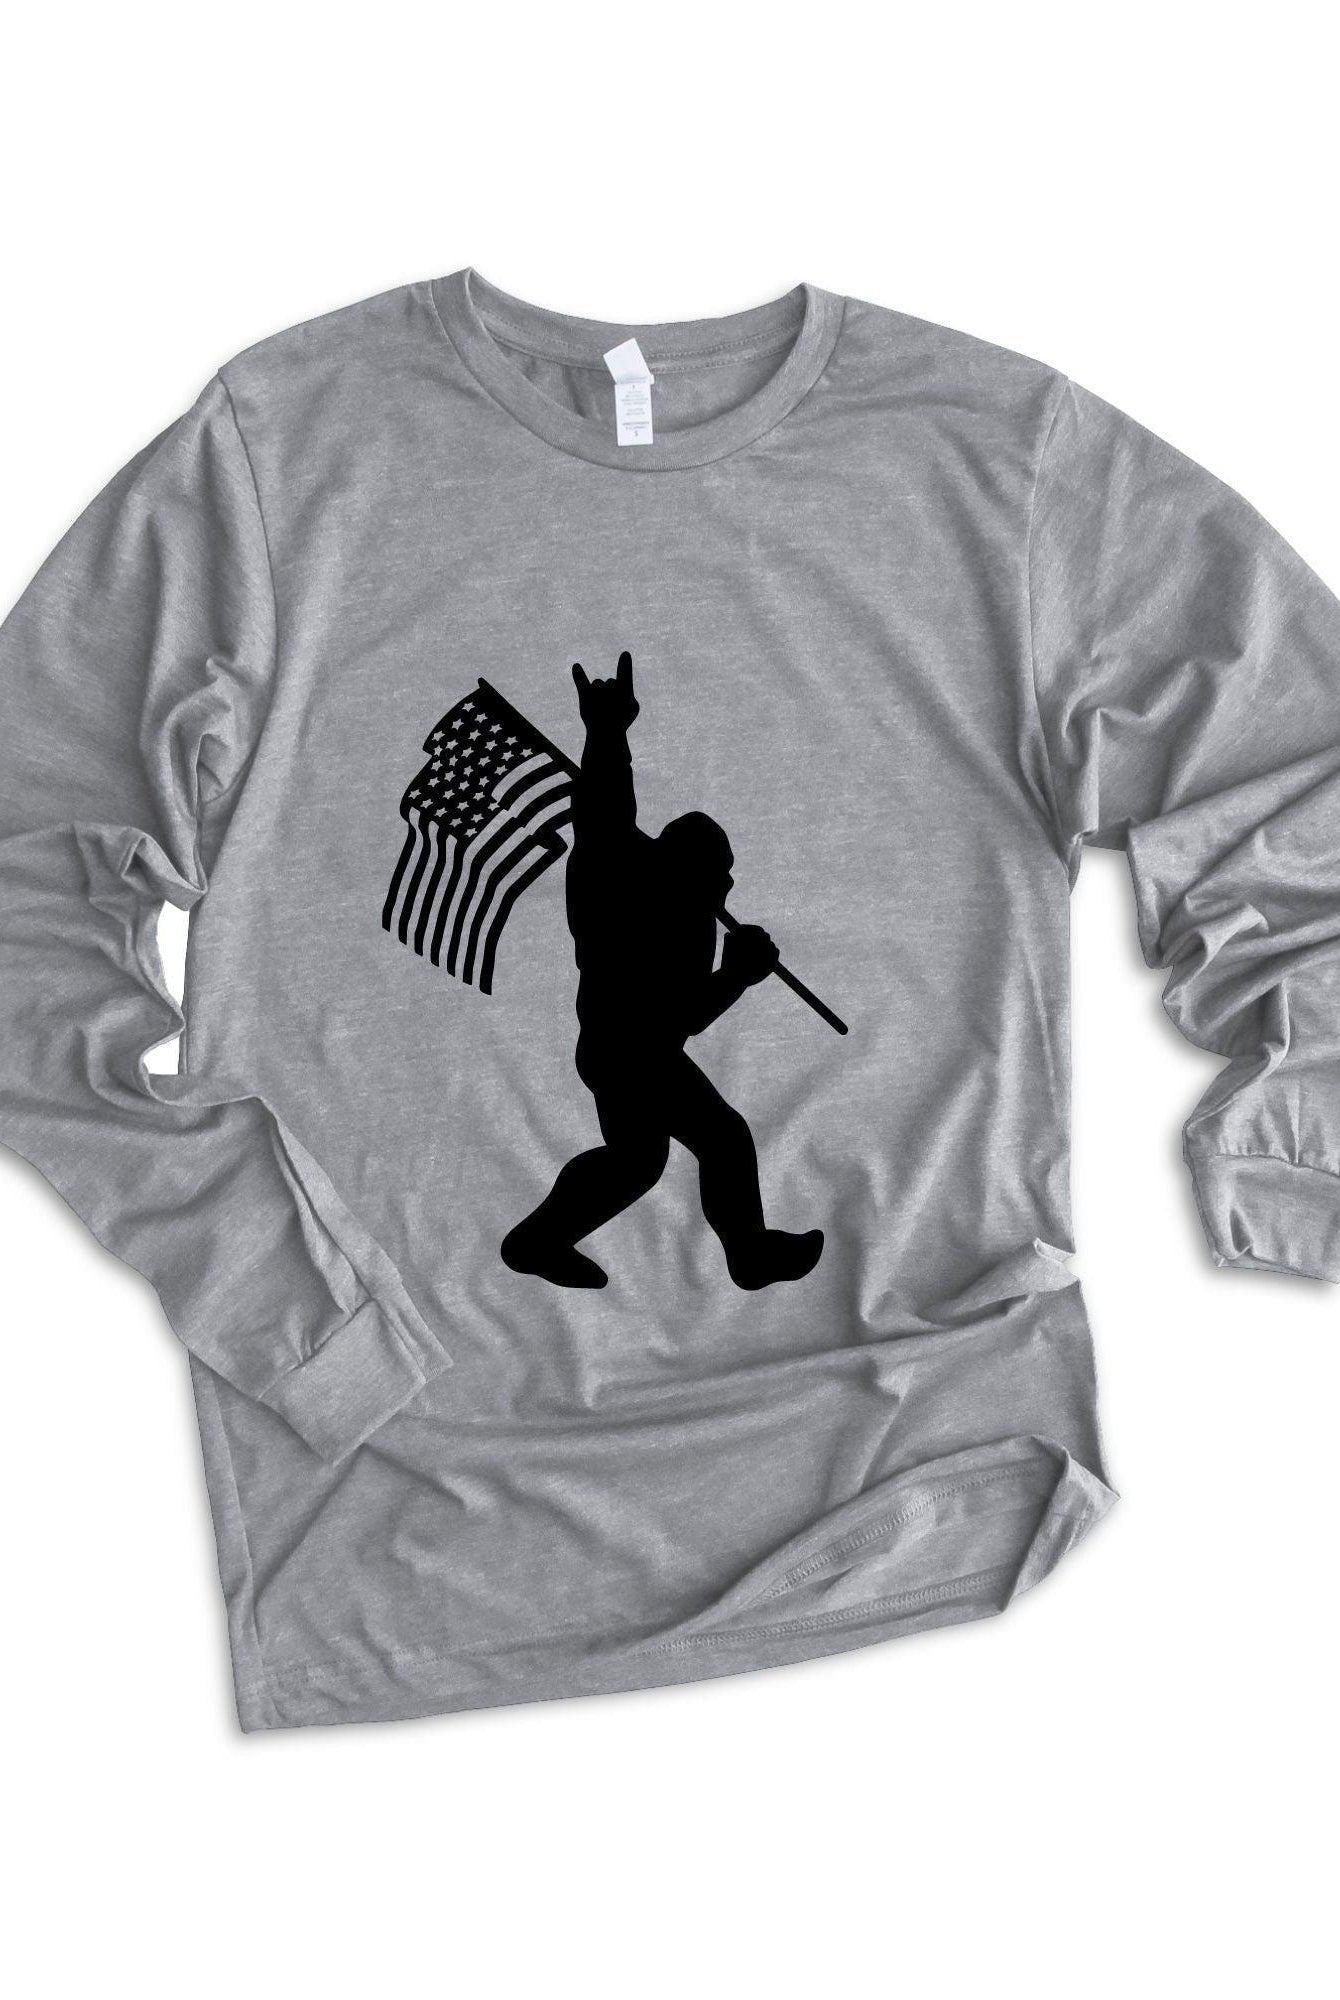 Men's Shirts - Tee's Camping Shirt Patriotic Bigfoot Shirt Outdoor Wear